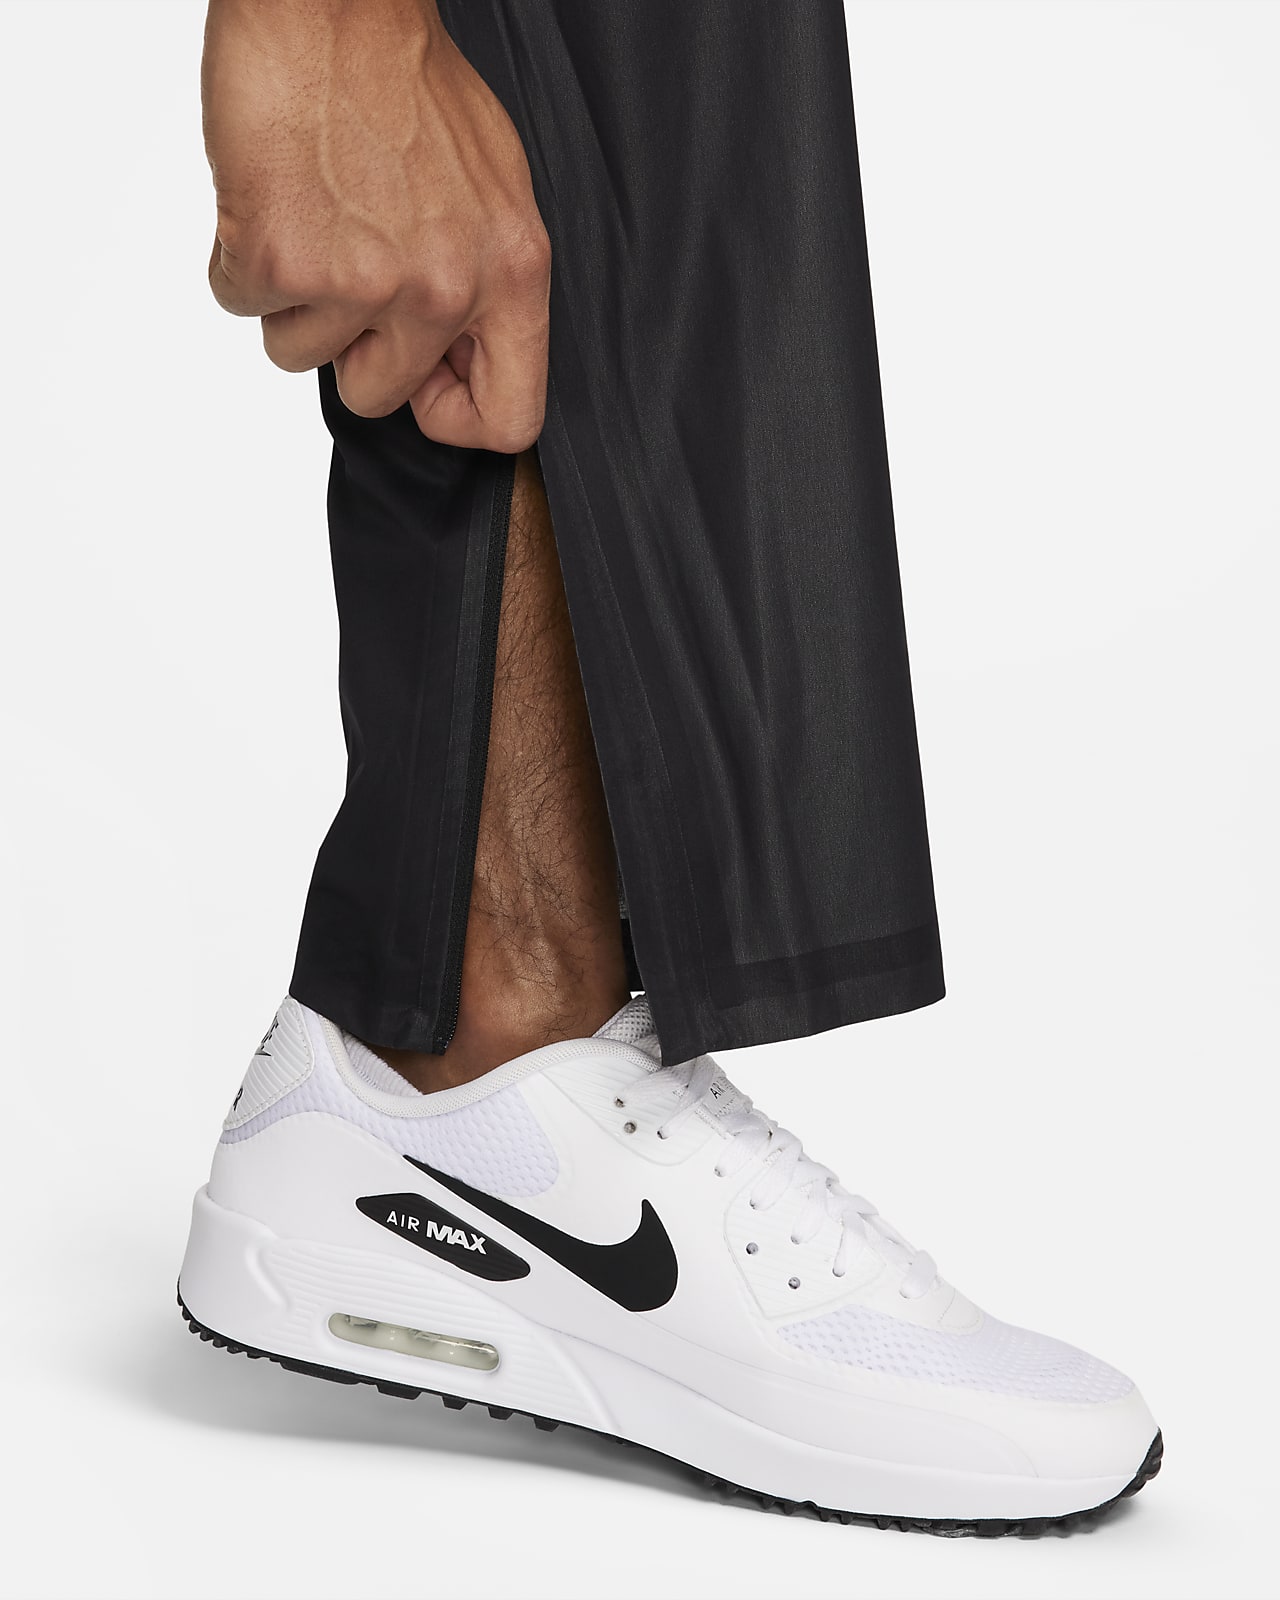 Nike Storm-FIT ADV Men's Golf Trousers